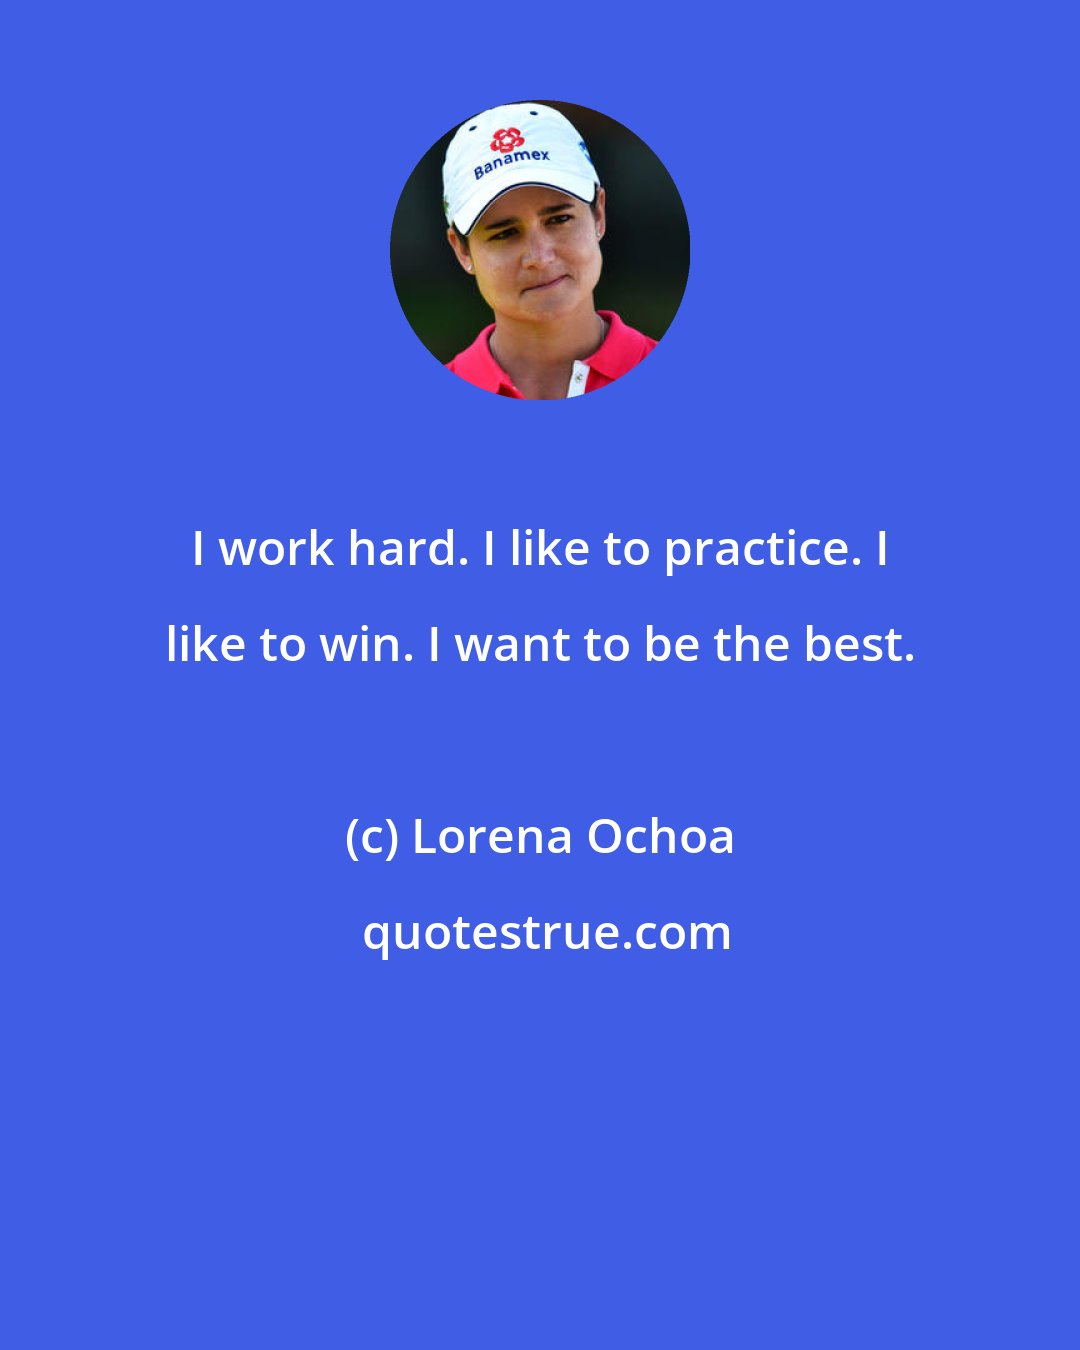 Lorena Ochoa: I work hard. I like to practice. I like to win. I want to be the best.